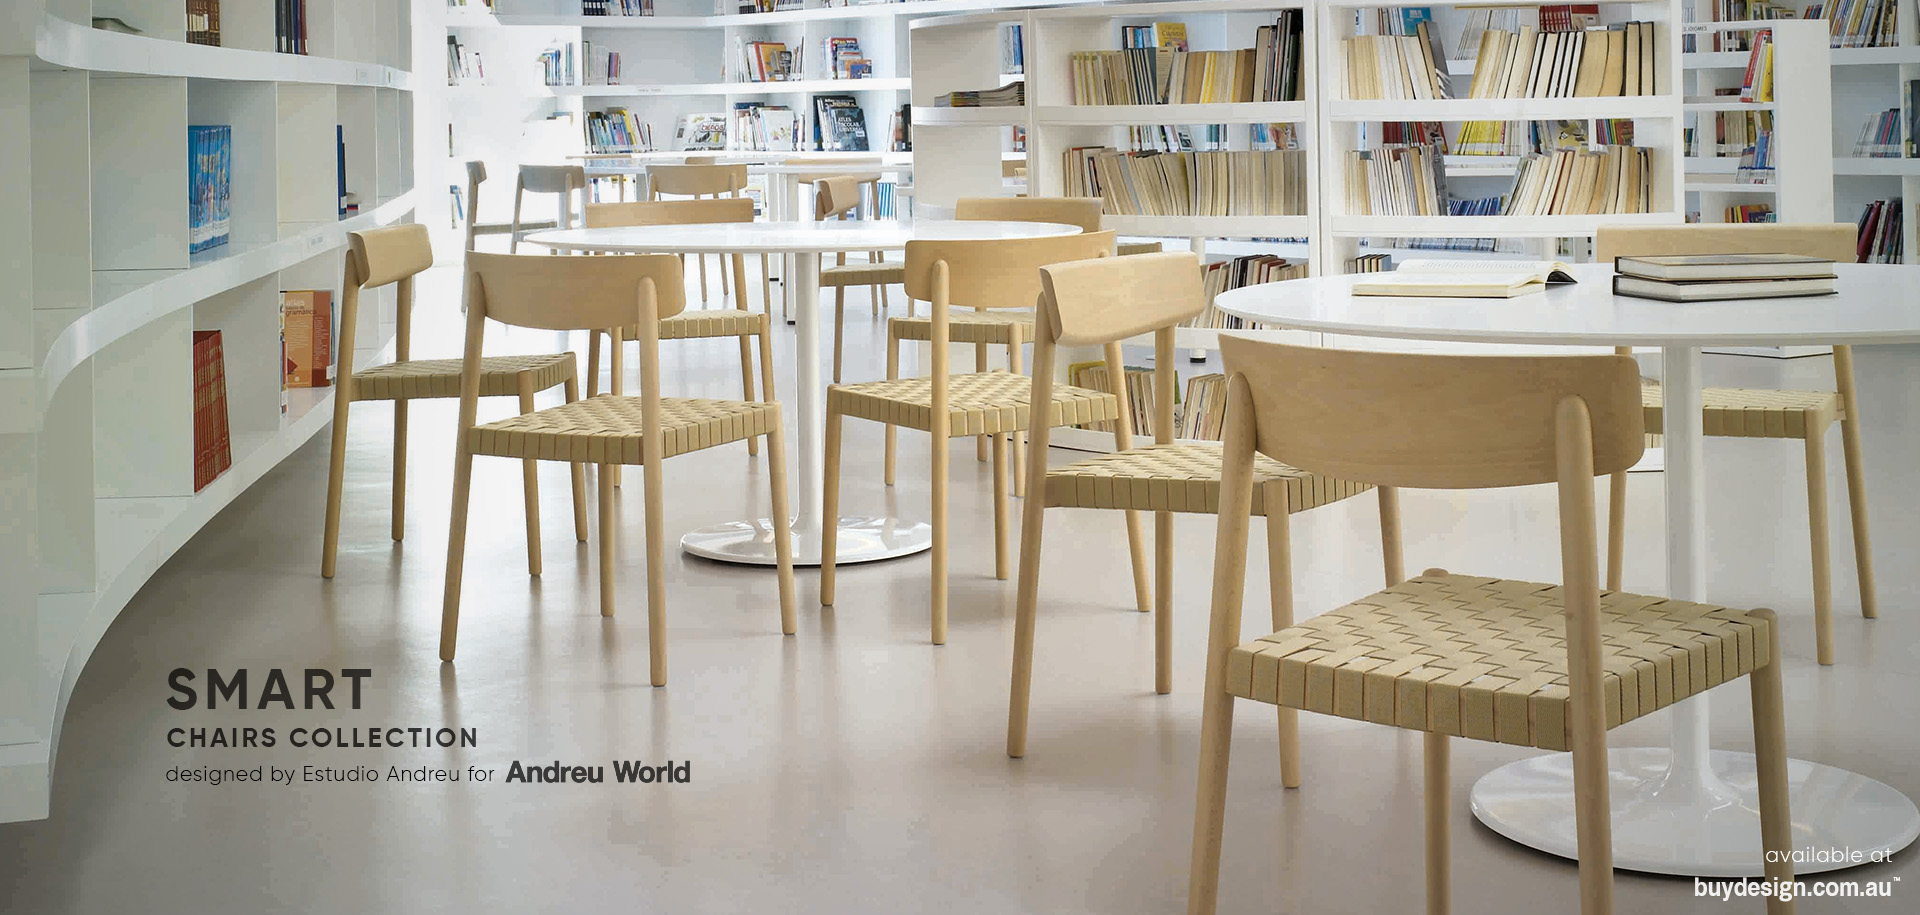 BuyDesign Andreu World S Smart Collection